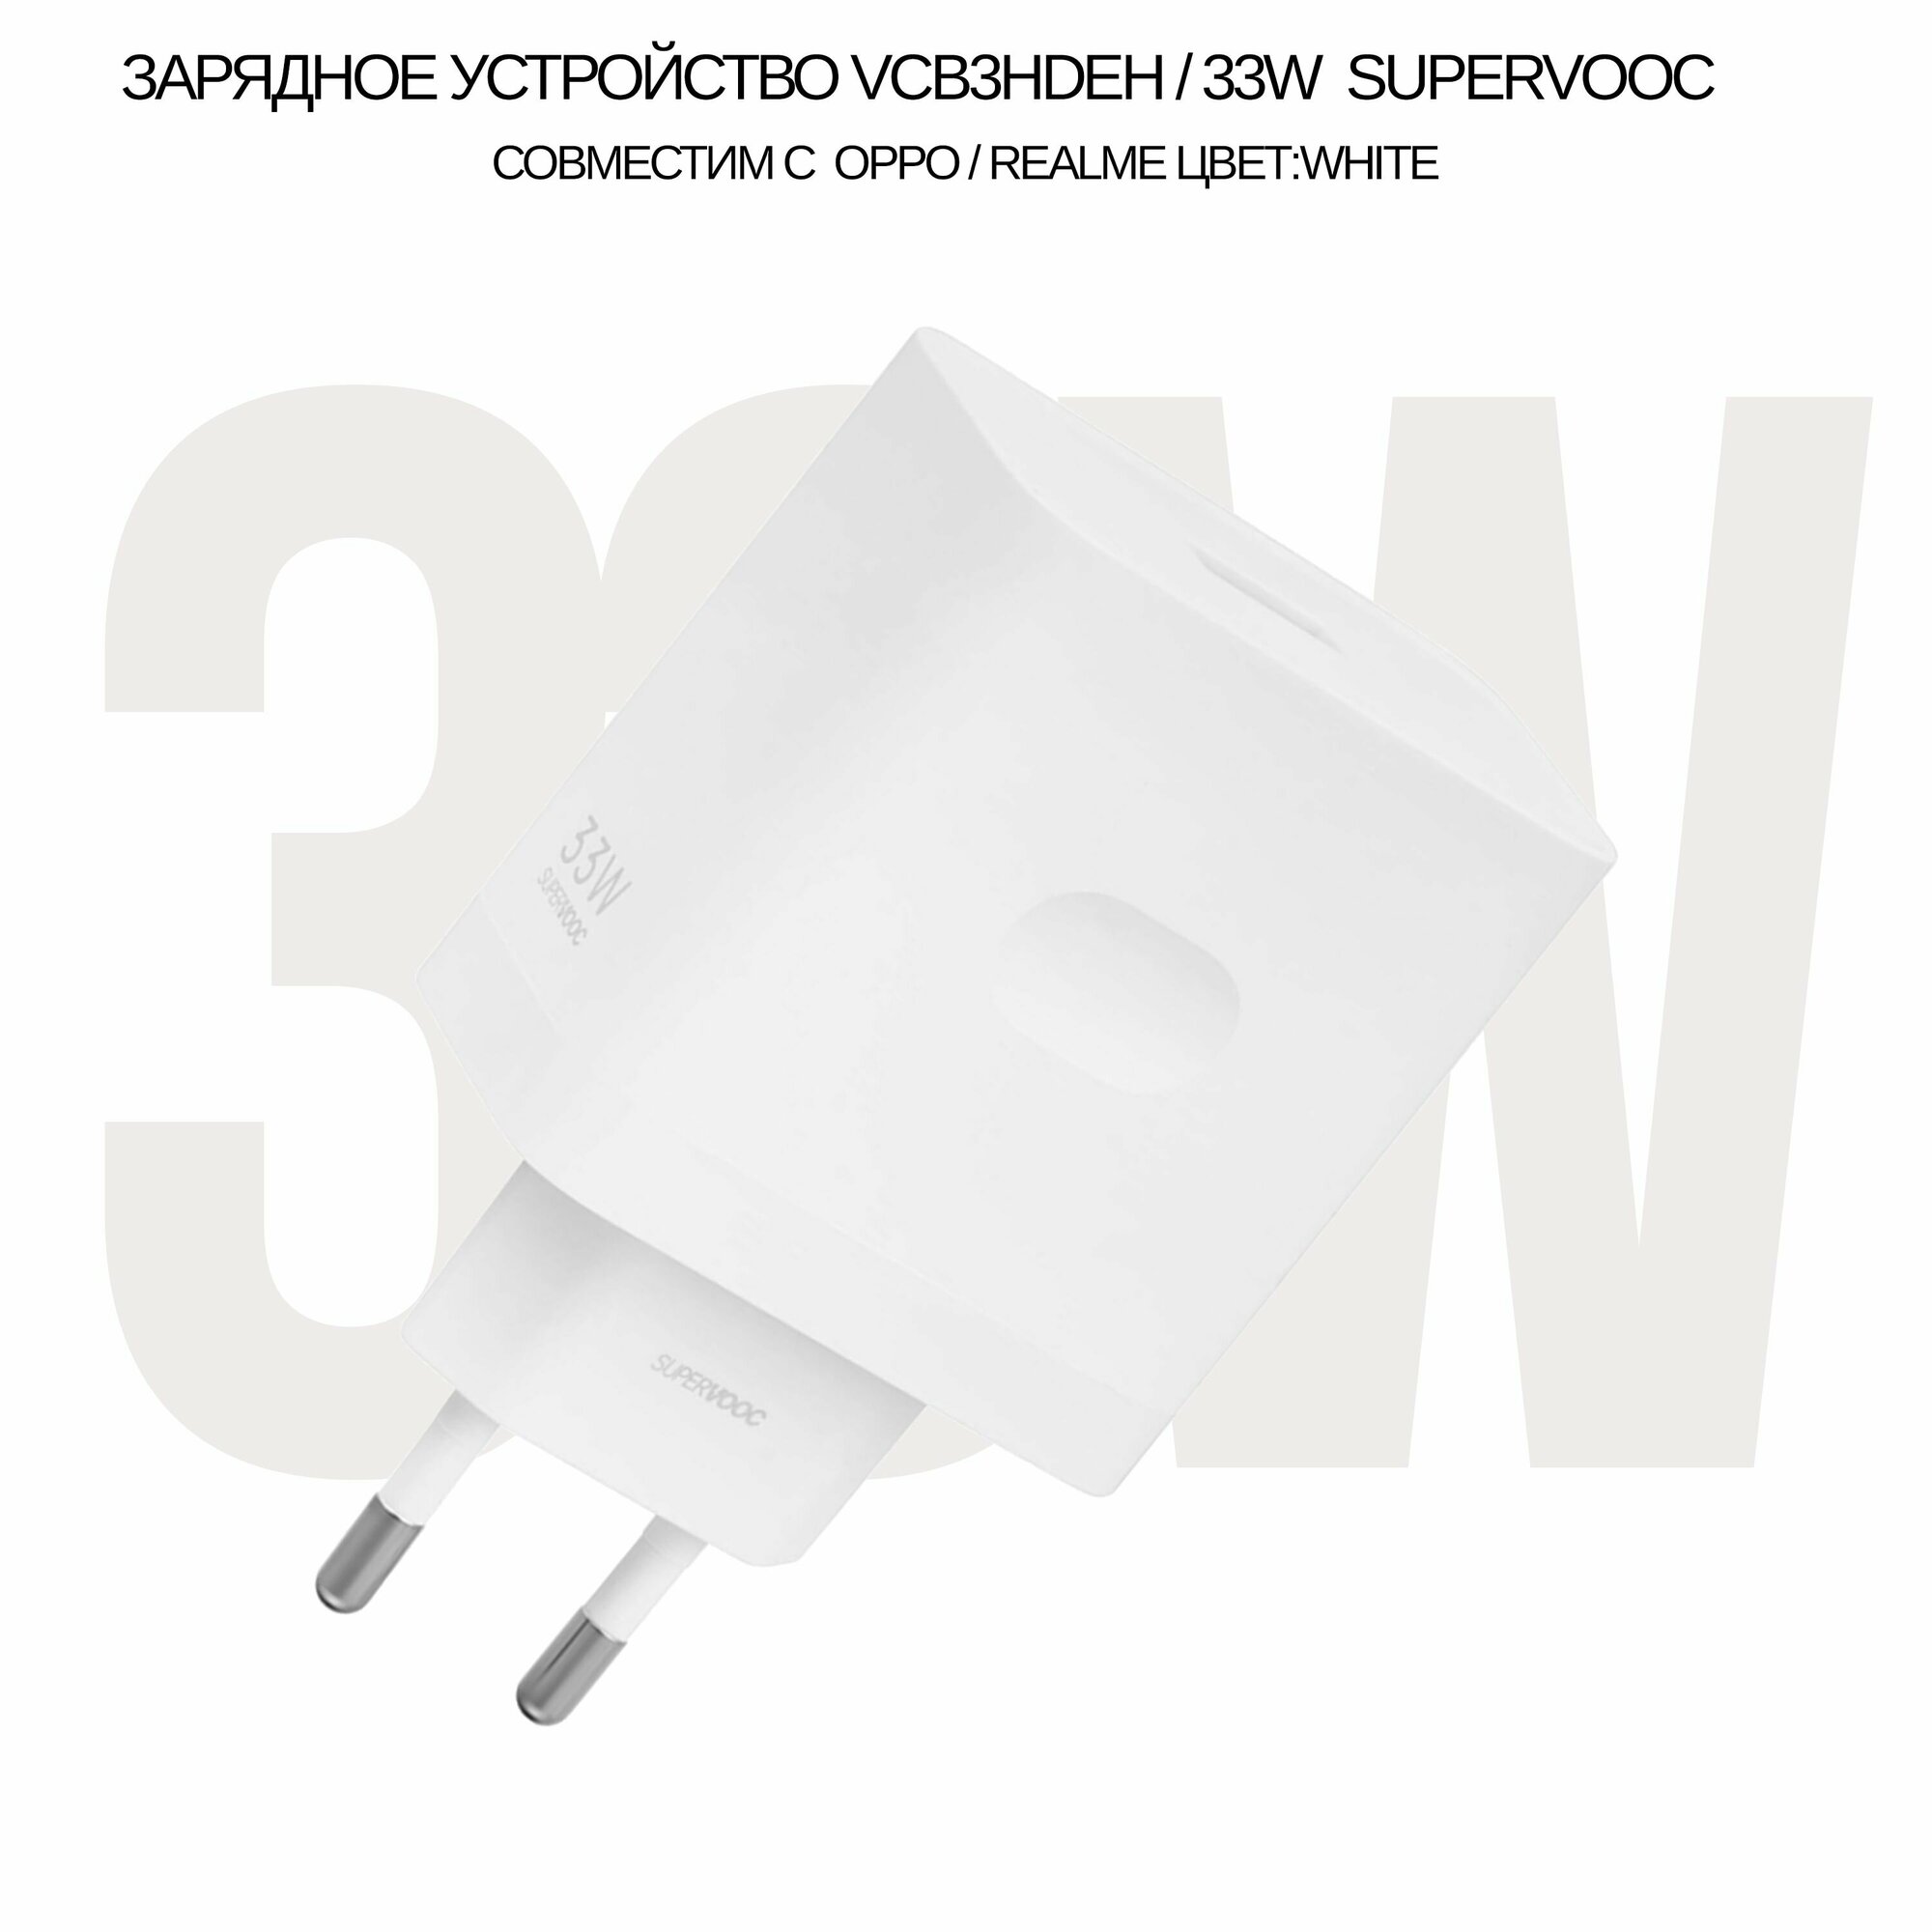 Сетевое зарядное устройство VCB3HDEH совместим с Realme и Oppo SUPERVOOC с USB входом 33W (цвет: White), без упаковки